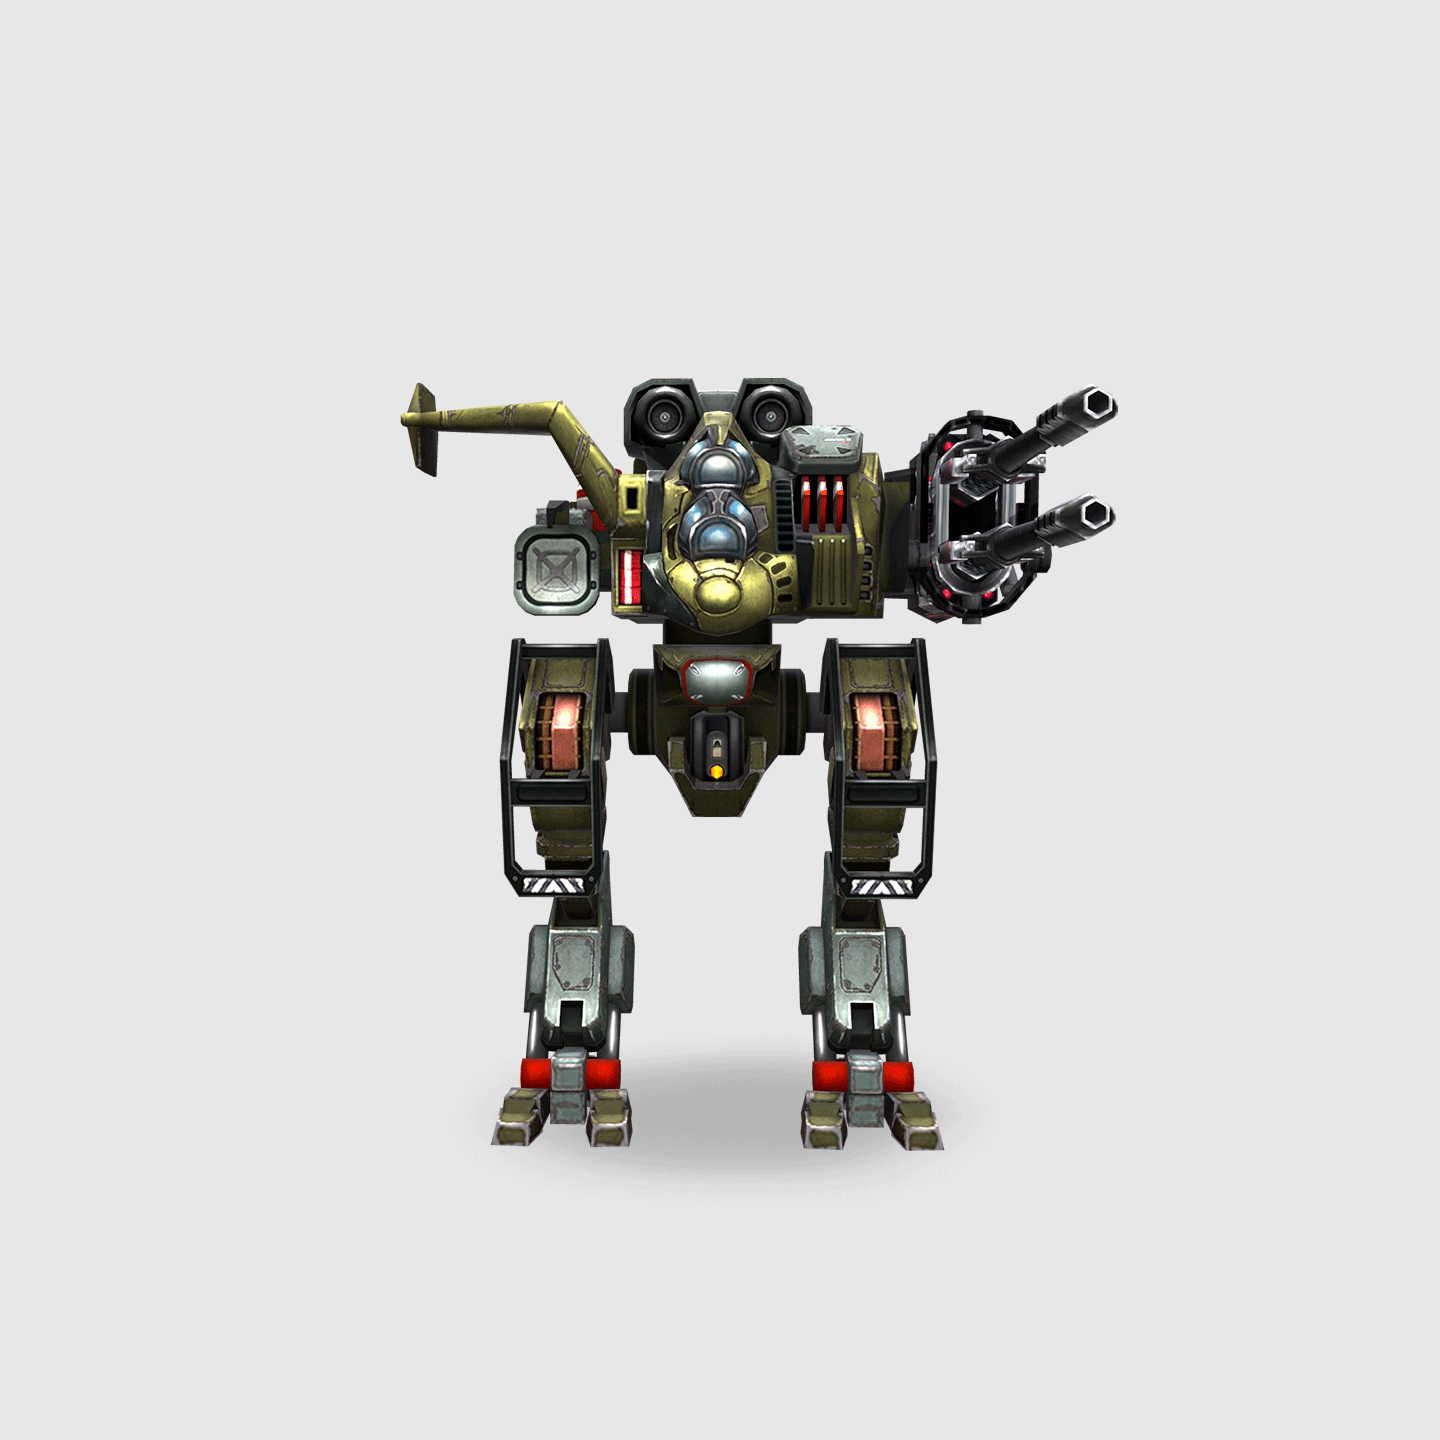 Lego War Robots Cossack | vlr.eng.br